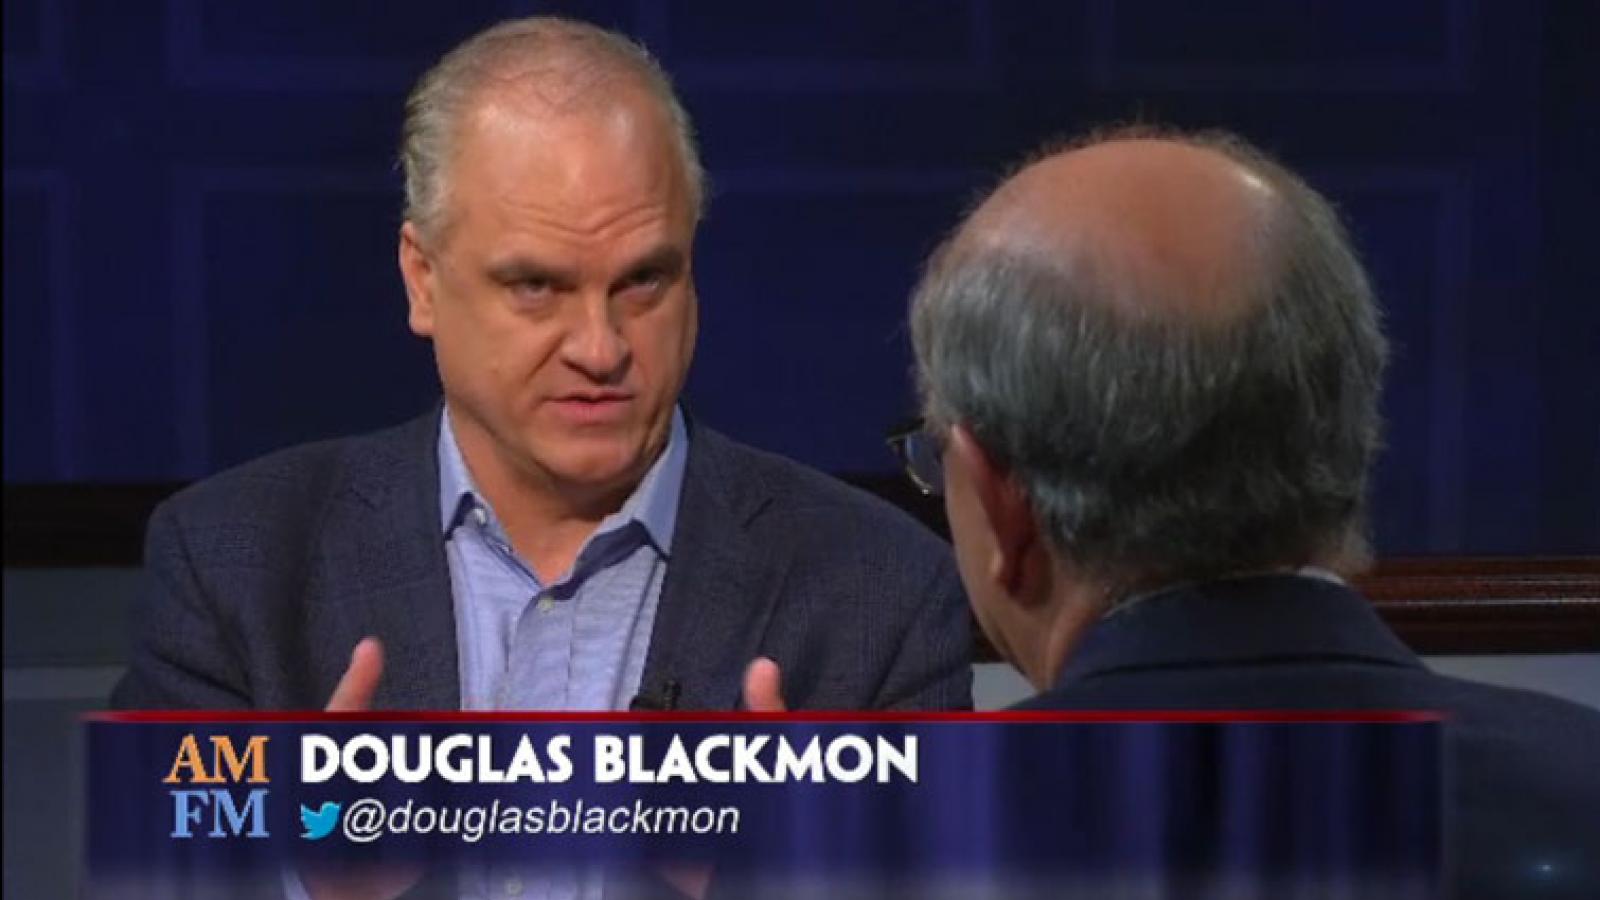 Douglas Blackmon poses a question